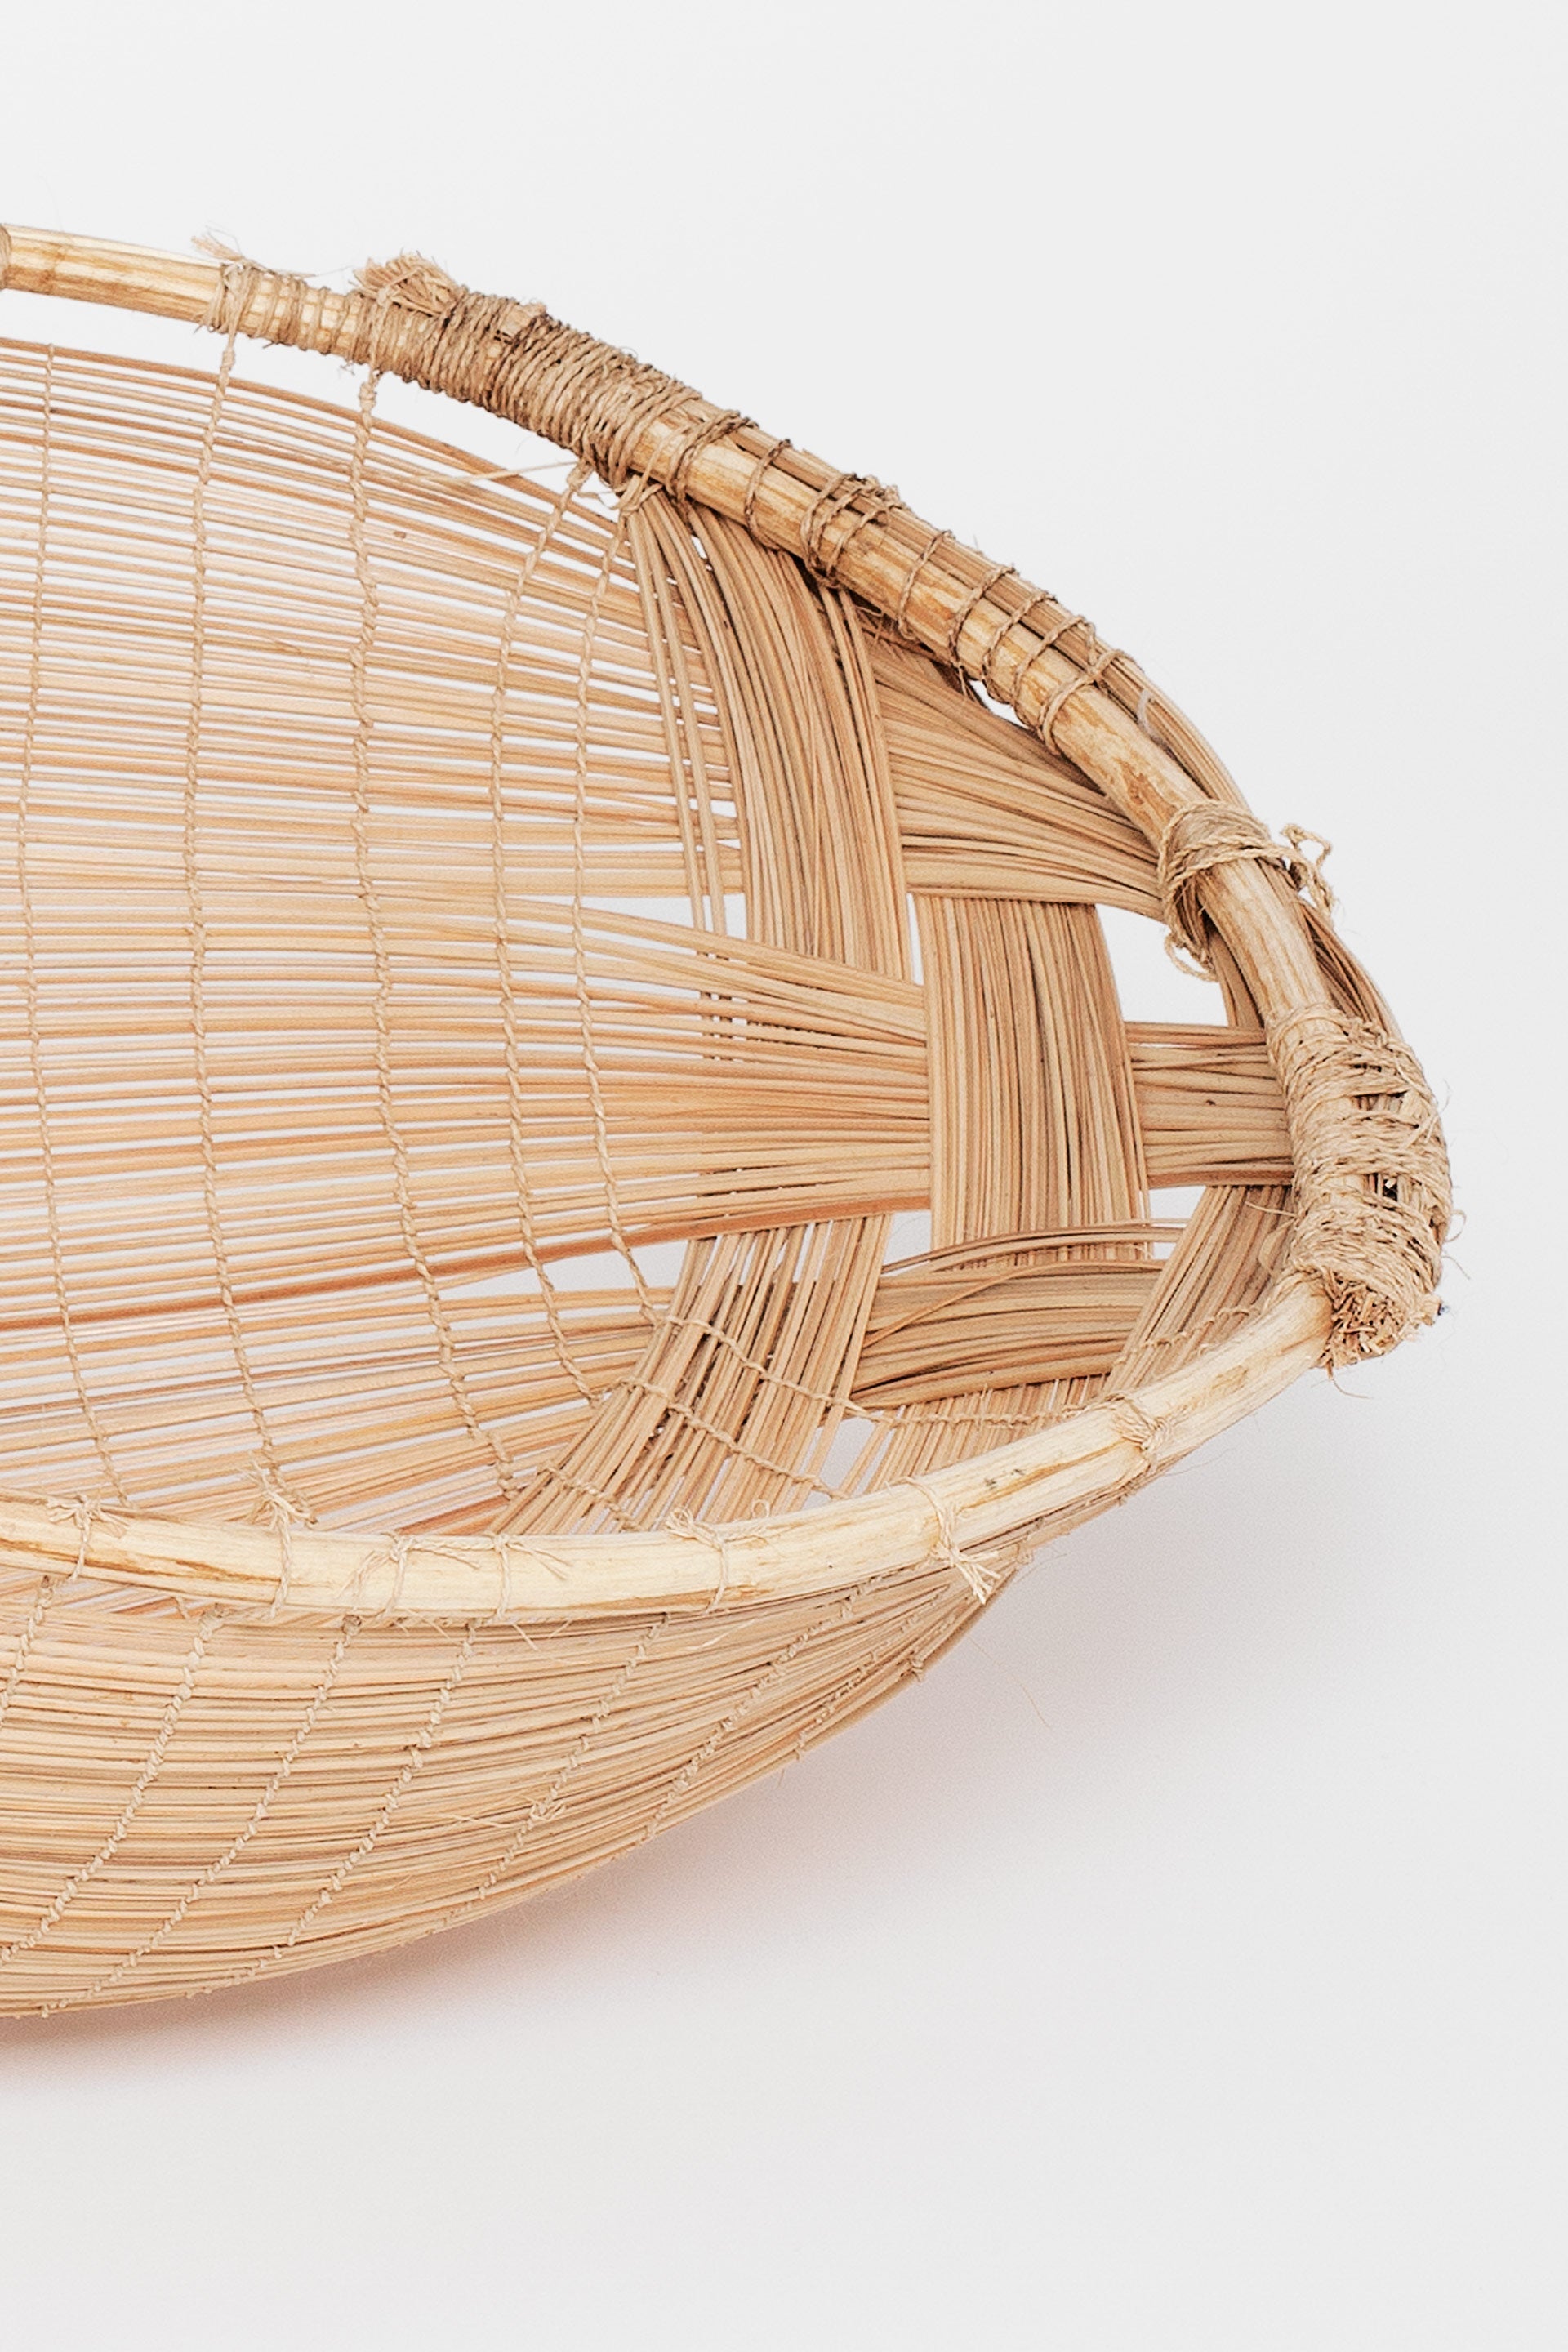 Traditional Mehinako Fishing Basket